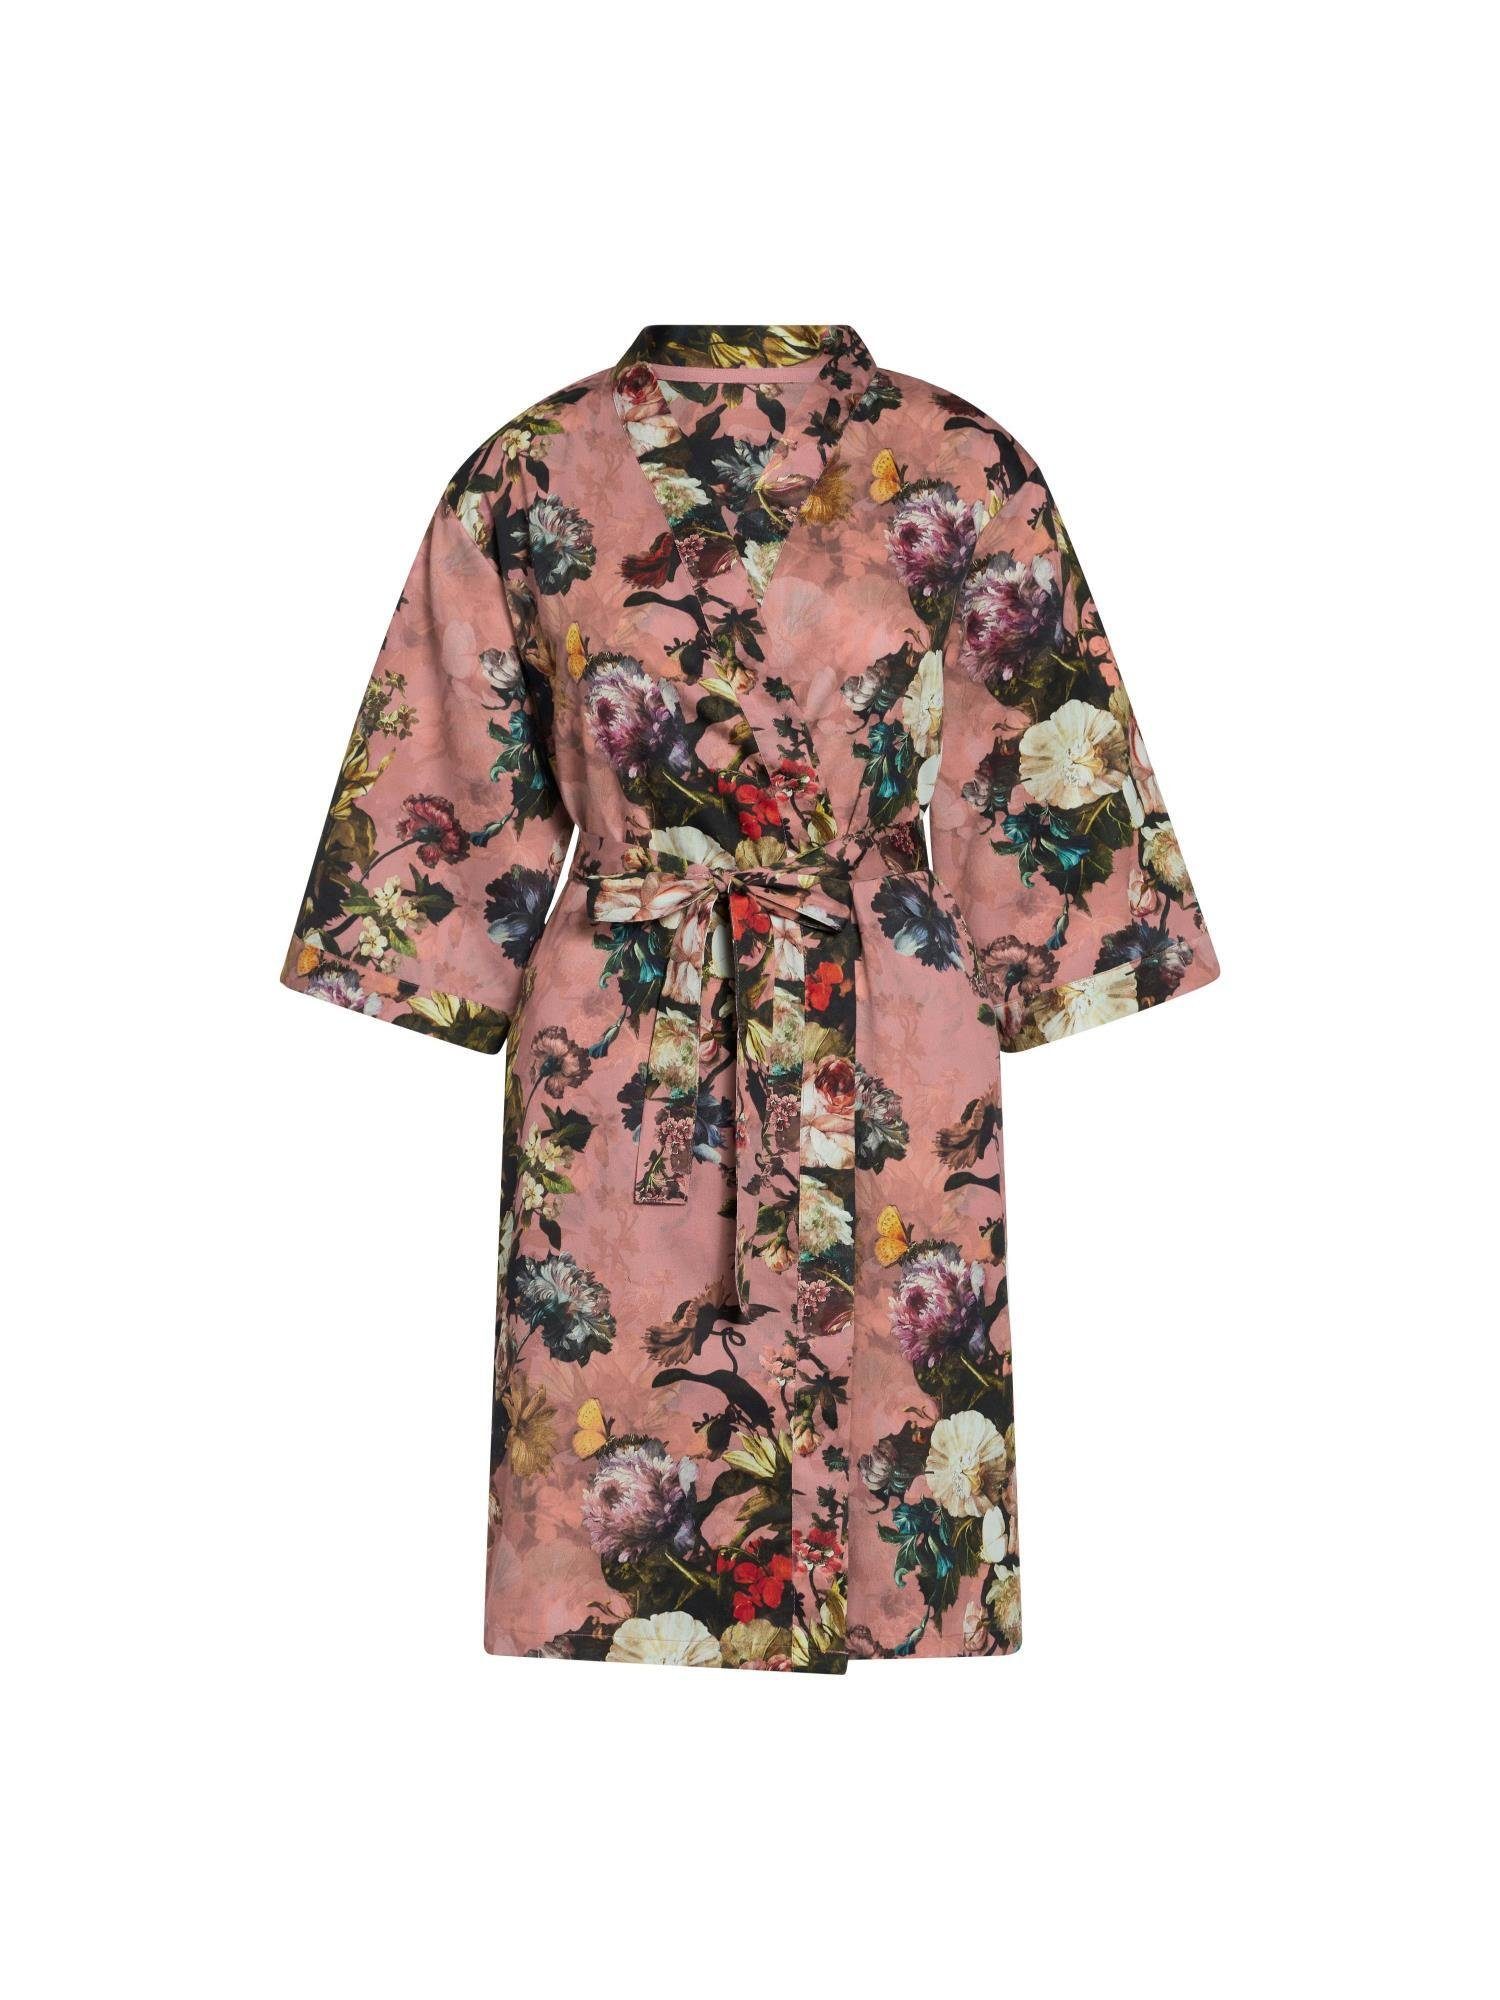 Essenza Kimono sarai karli, Kurzform, Baumwolle, Kimono-Kragen, Gürtel, mit wunderschönem Blumenprin Darling pink